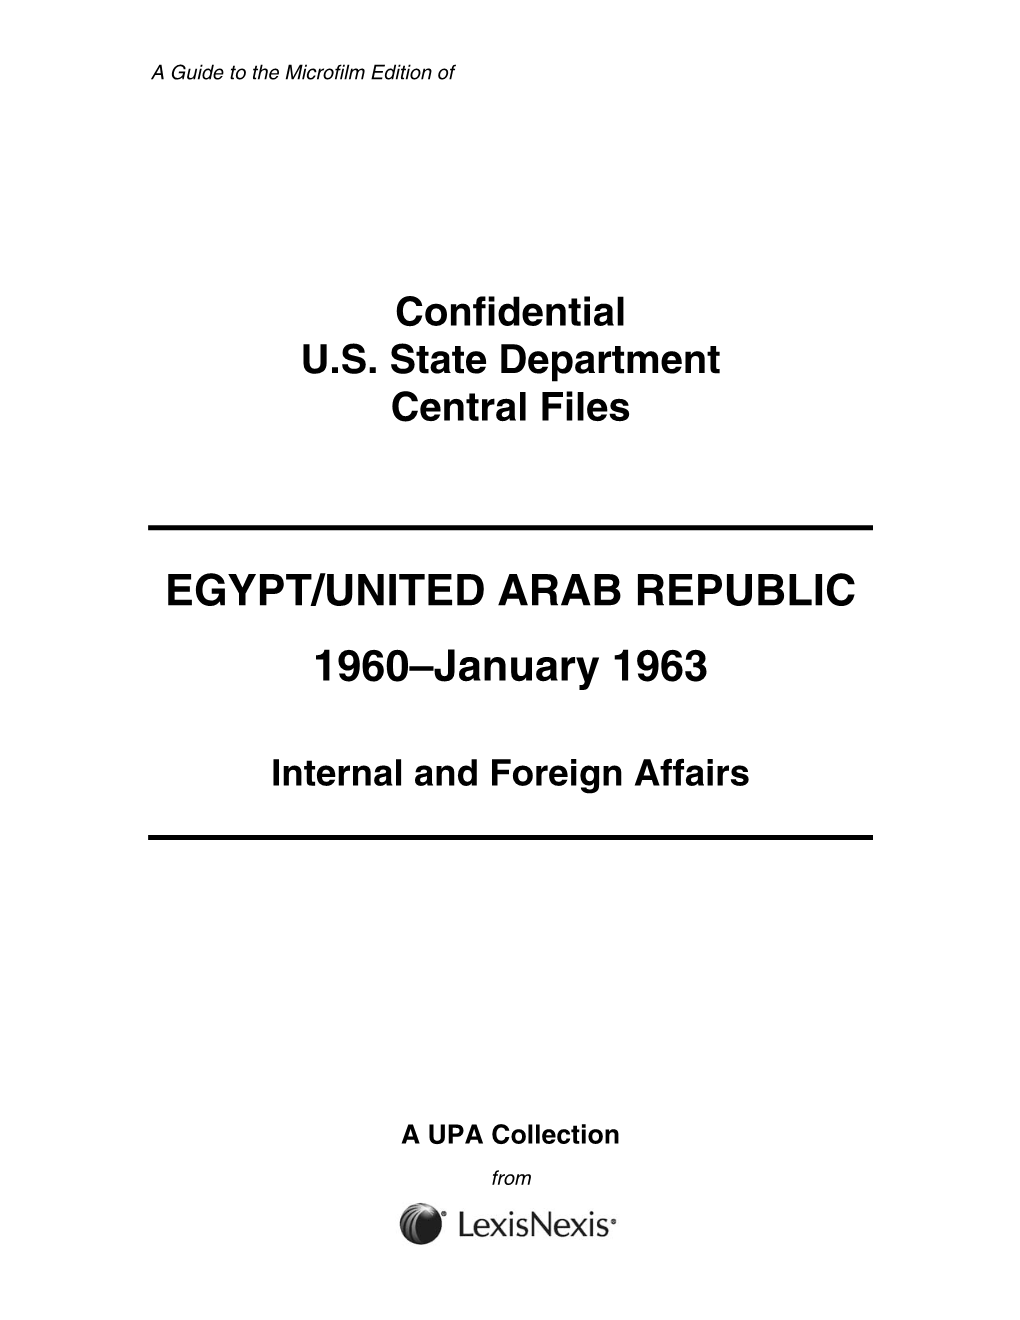 EGYPT/UNITED ARAB REPUBLIC 1960–January 1963